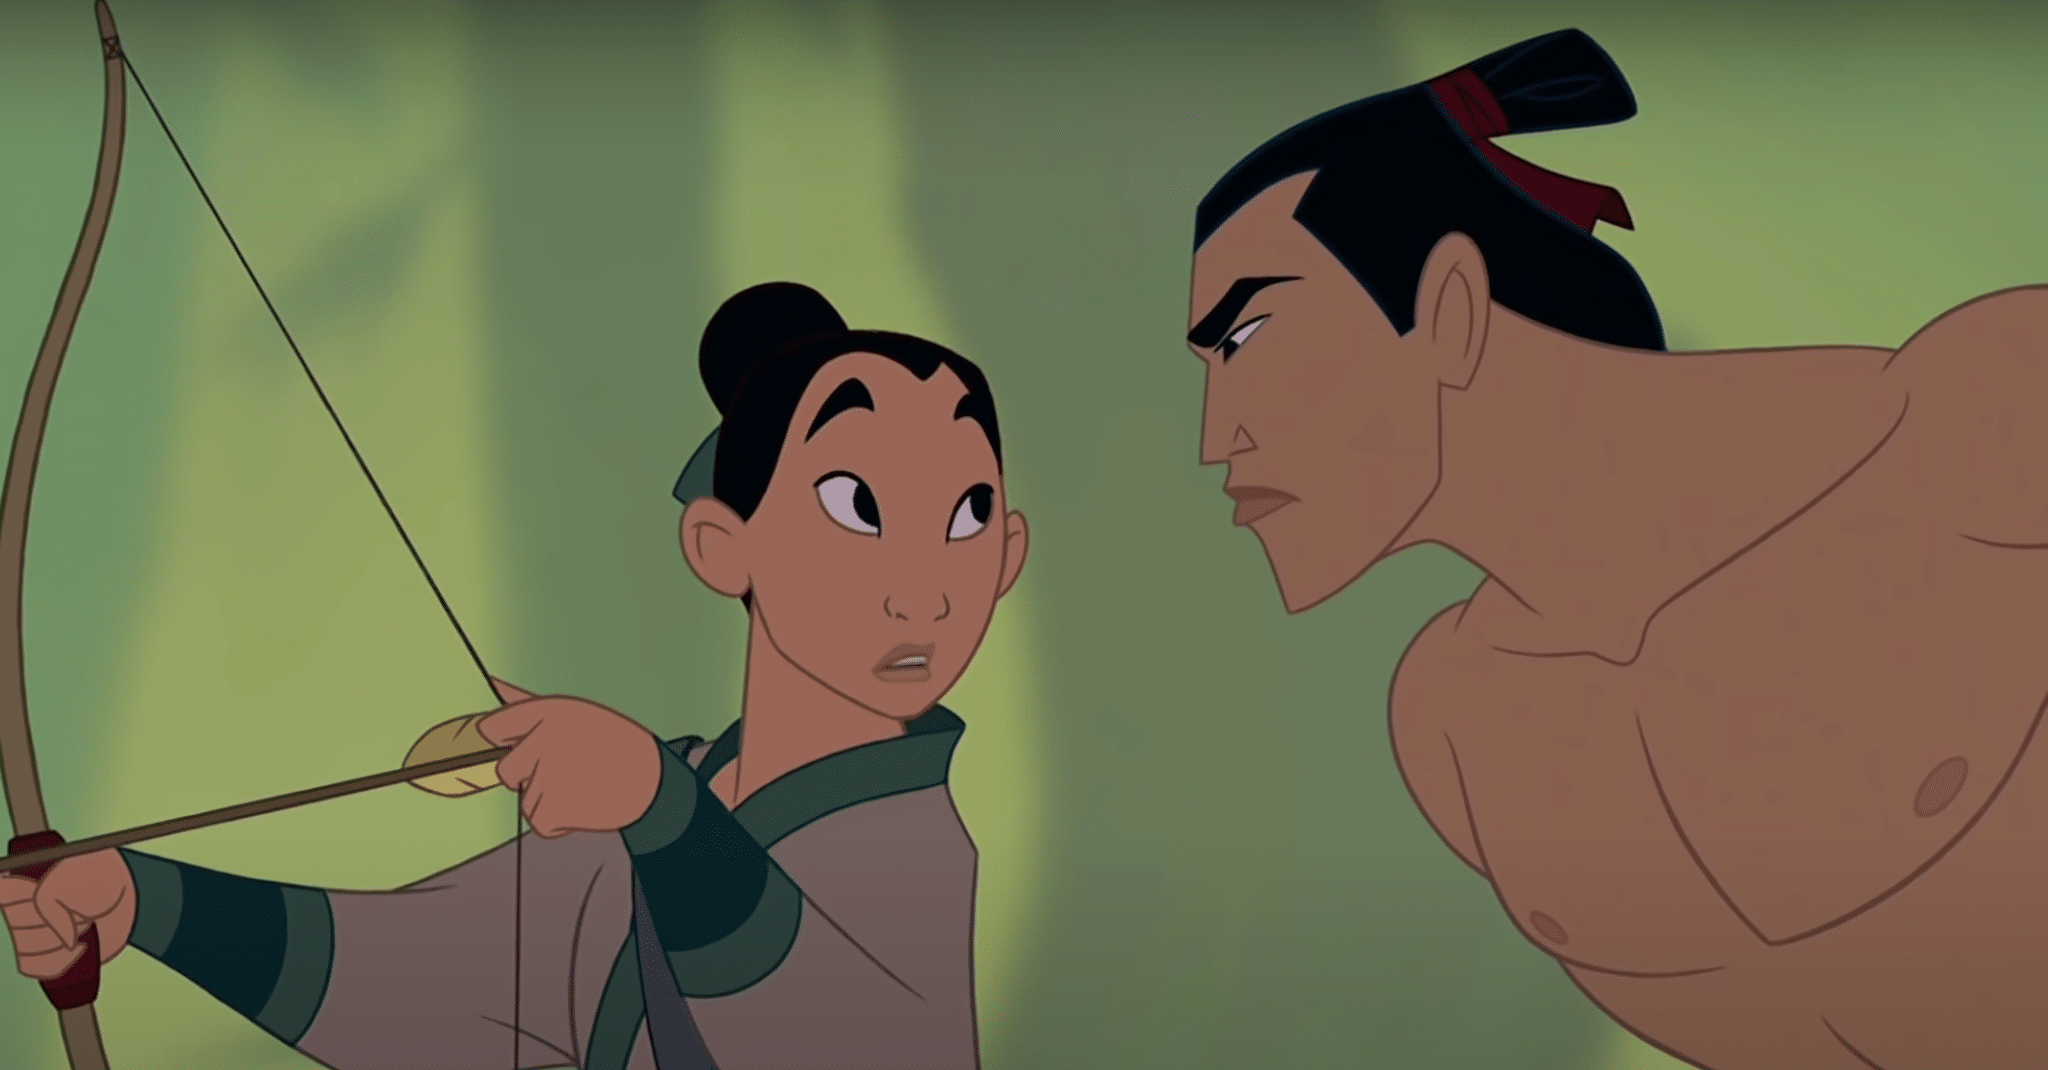 Mulan and Li Shang during the song “I’ll Make a Man Out of You.“ (YouTube/Disney)